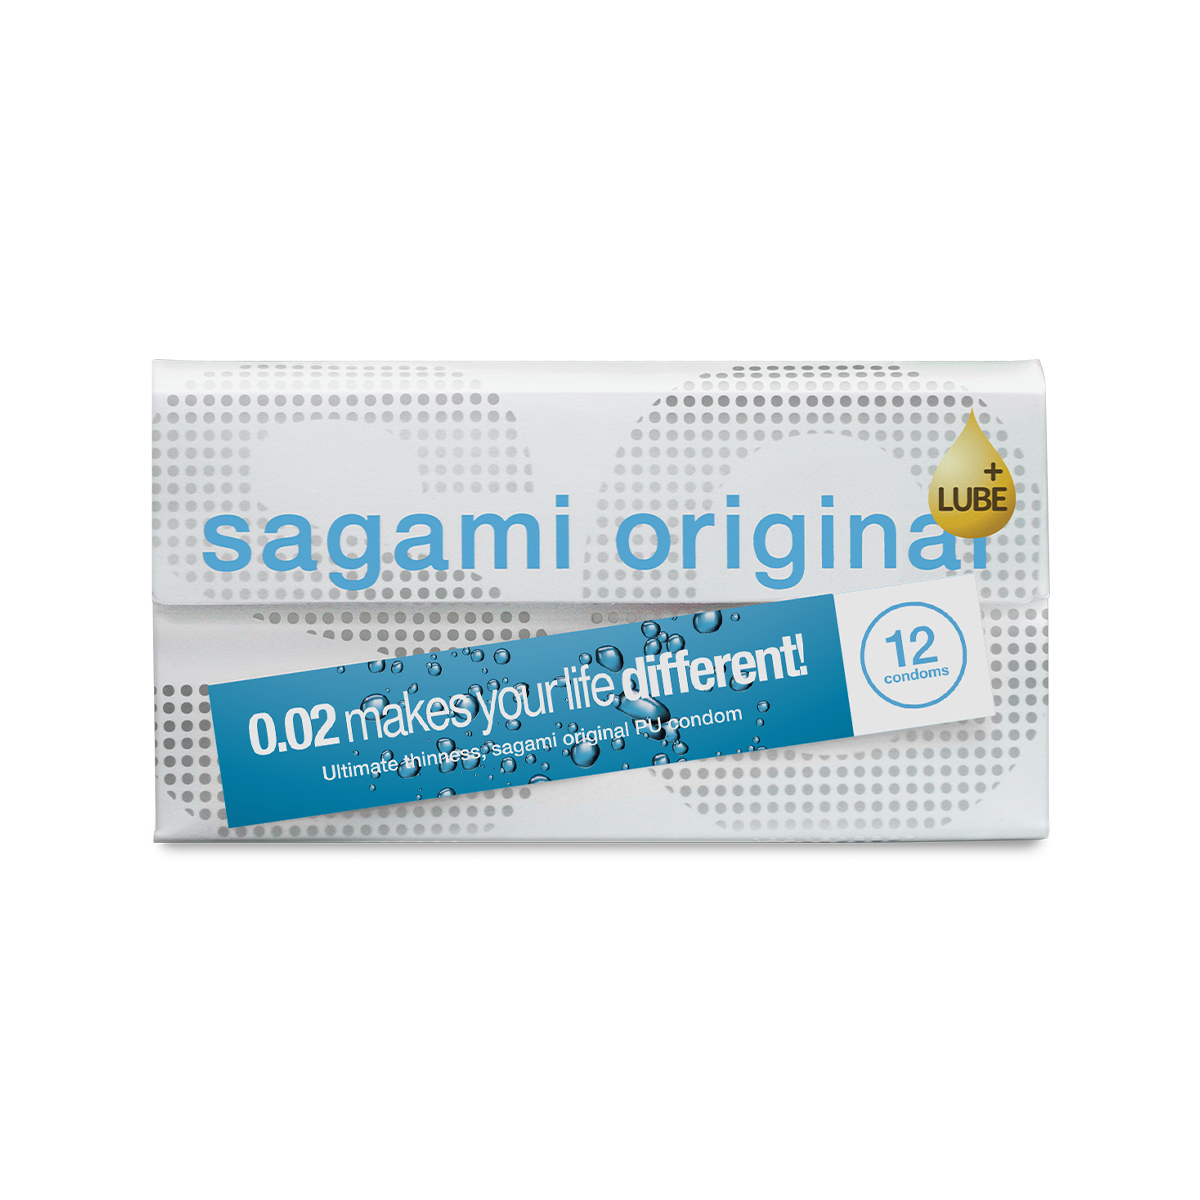 Sagami Original 0.02 Extra Lubricated 12s